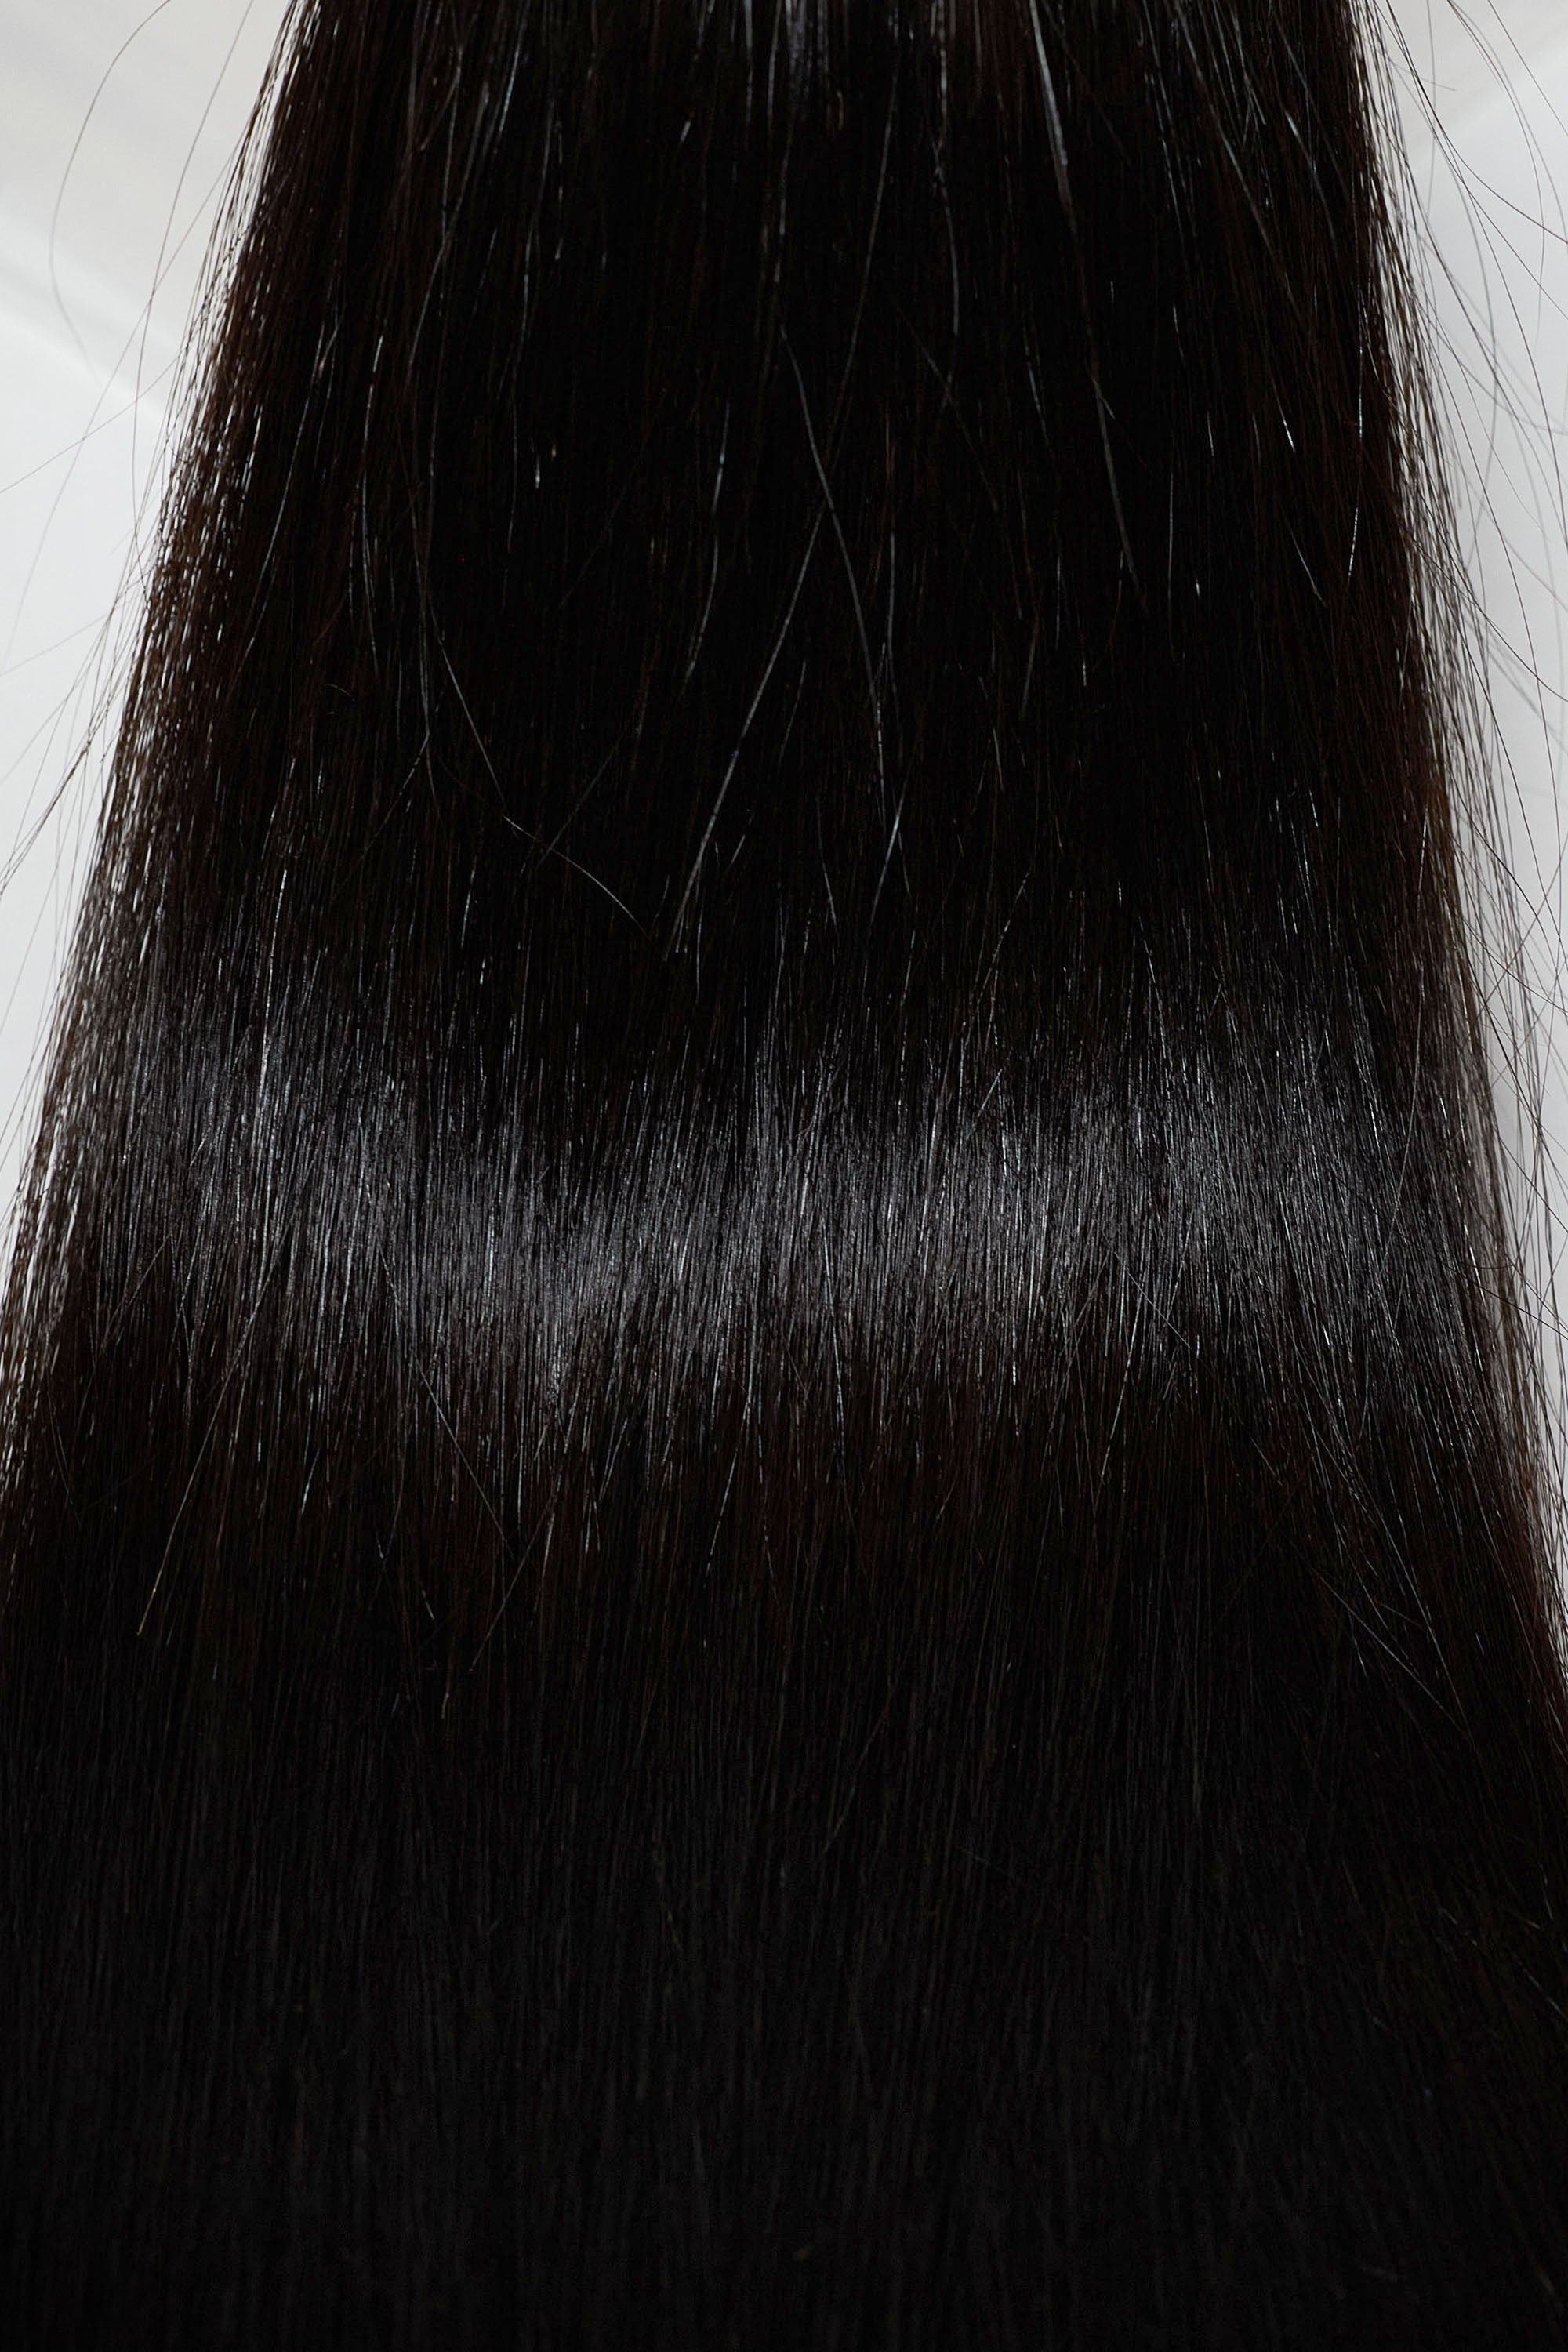 Behair professional Keratin Tip "Premium" 22" (55cm) Natural Straight Jet Black #1 - 25g (1g each pcs) hair extensions